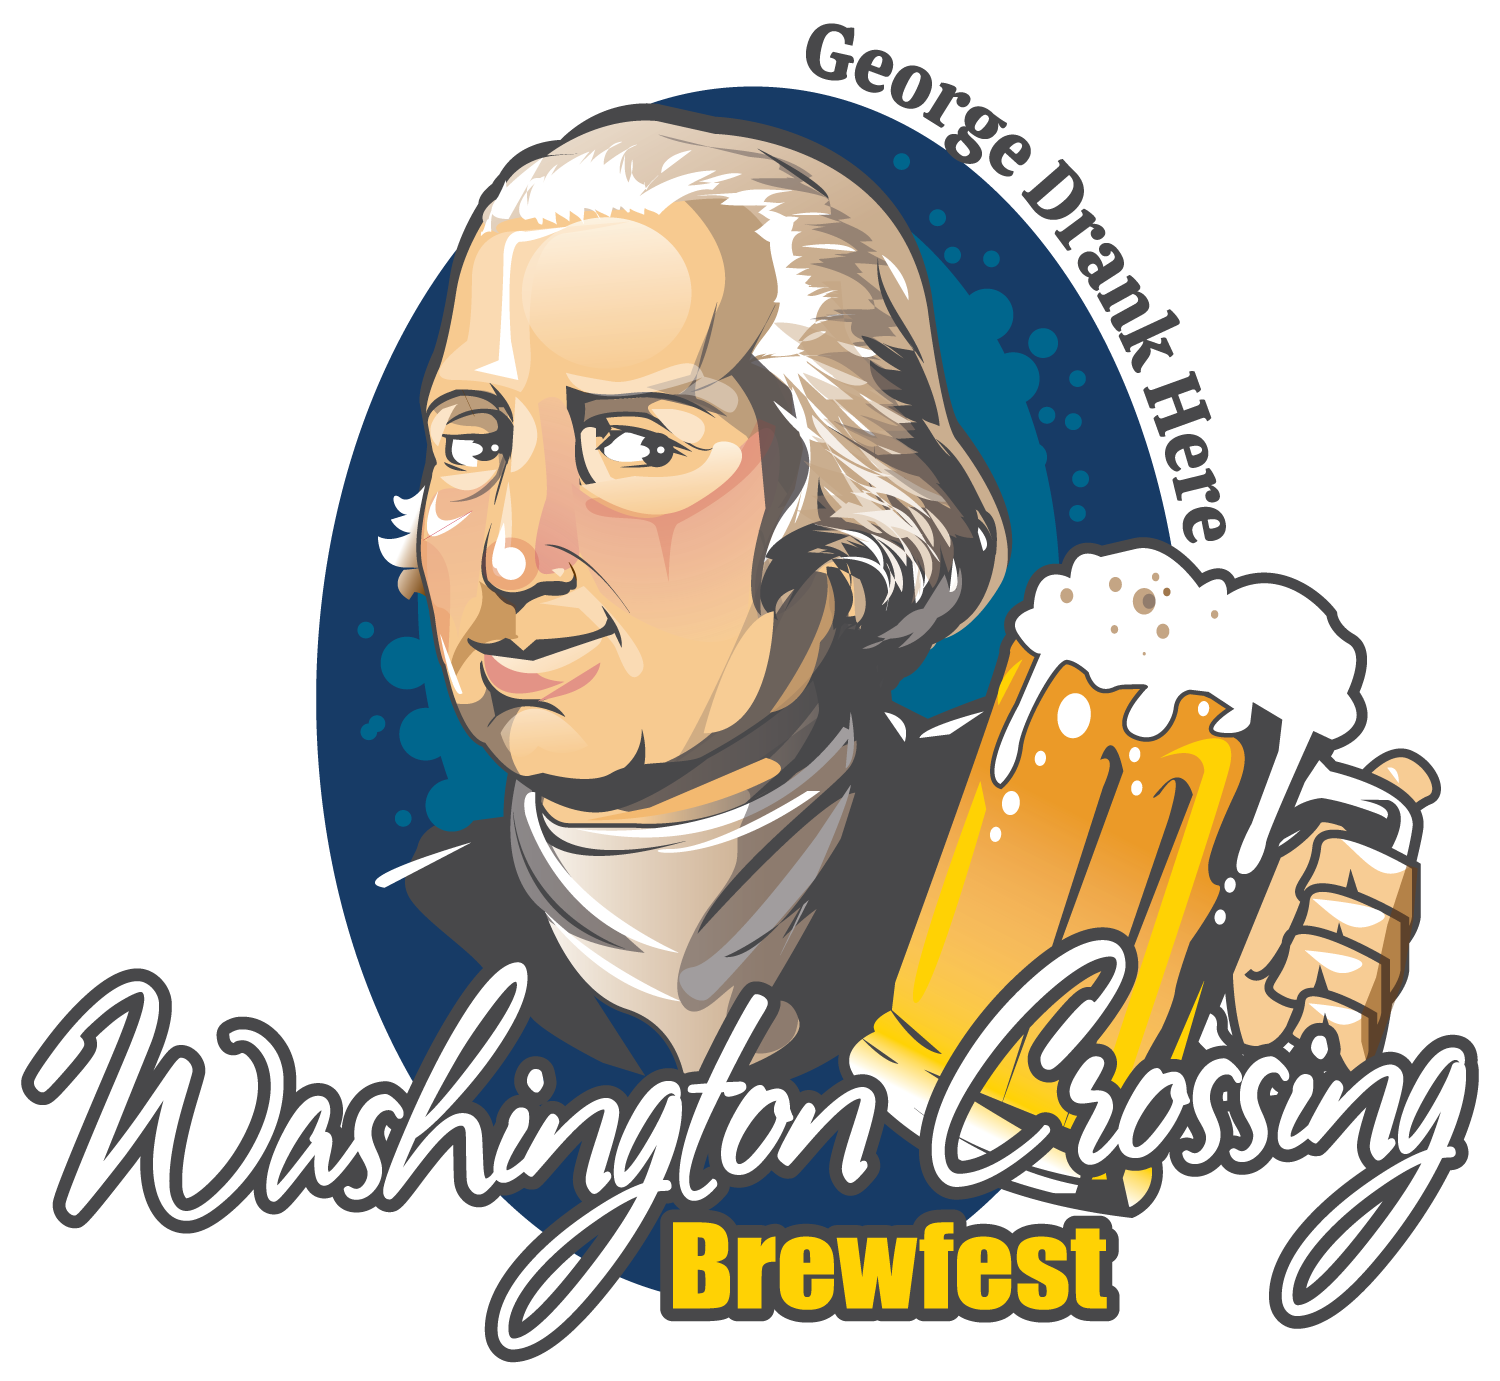 Washington Crossing Brewfest